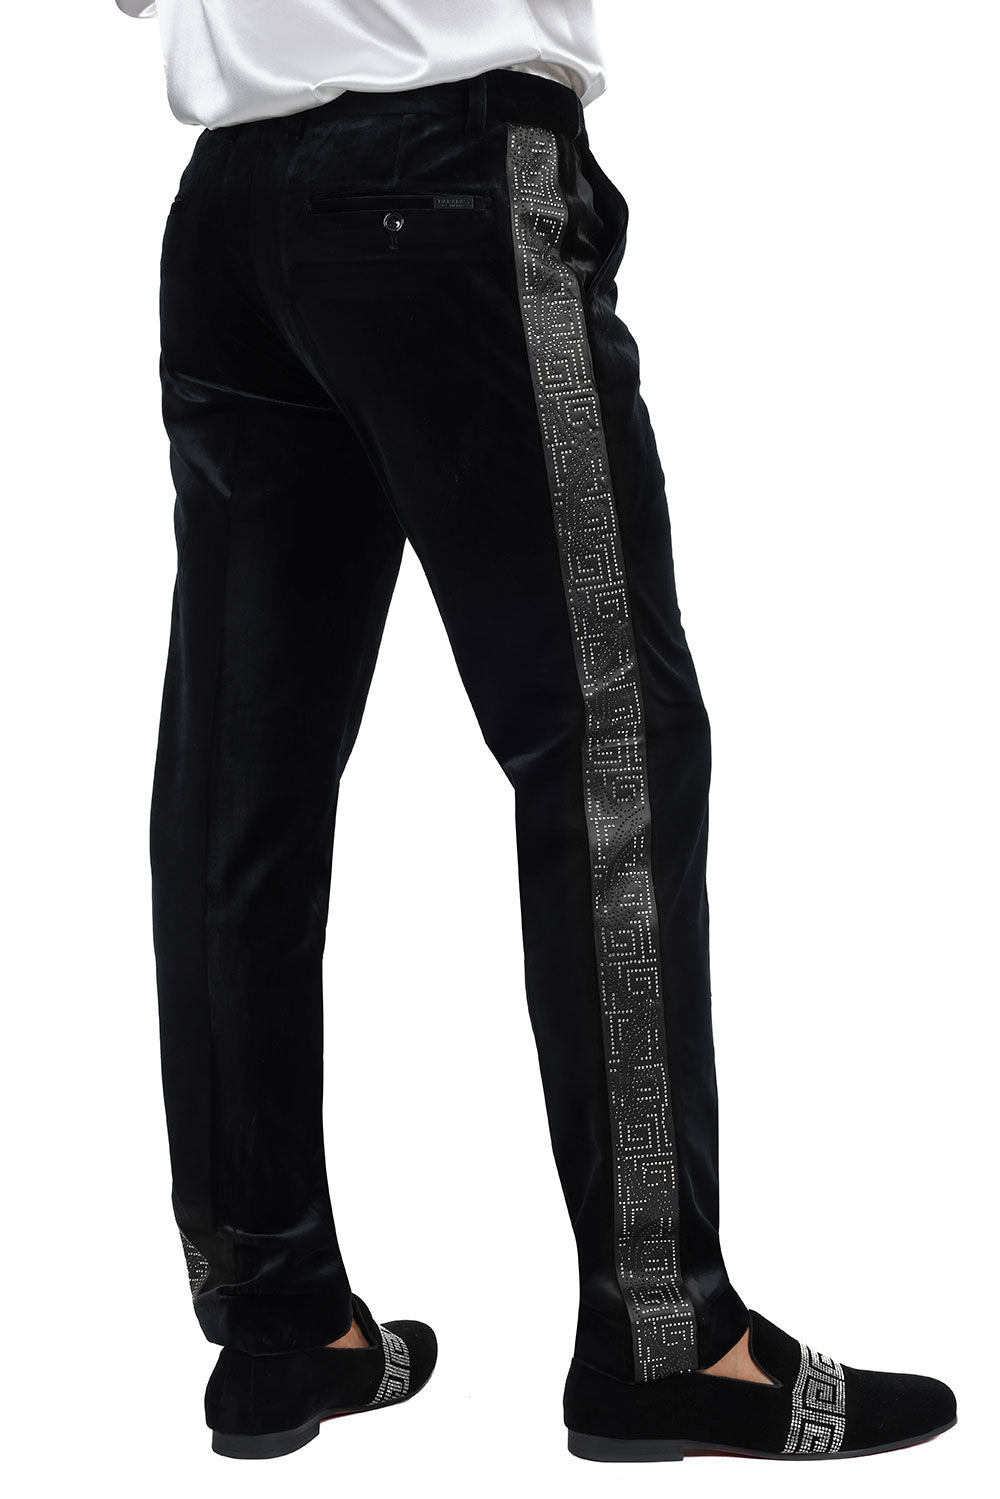 Barabas Men's Dress Velvet Rhinestone Greek Key Luxury Pants 2CPR3 Black Silver